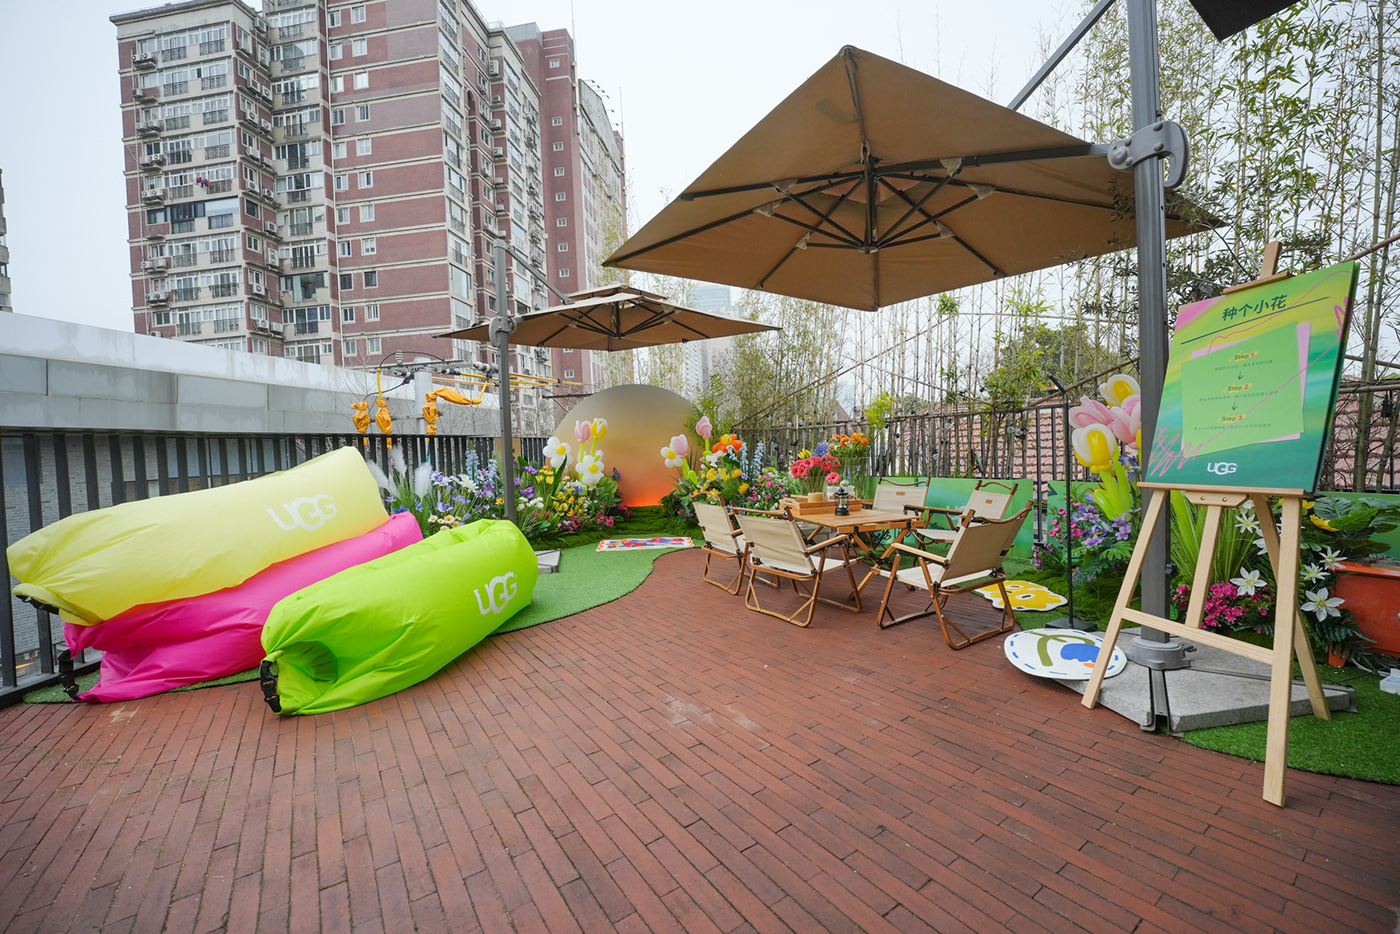 design Event green installation Pop-up store Popup shanghai Space  spring Ugg